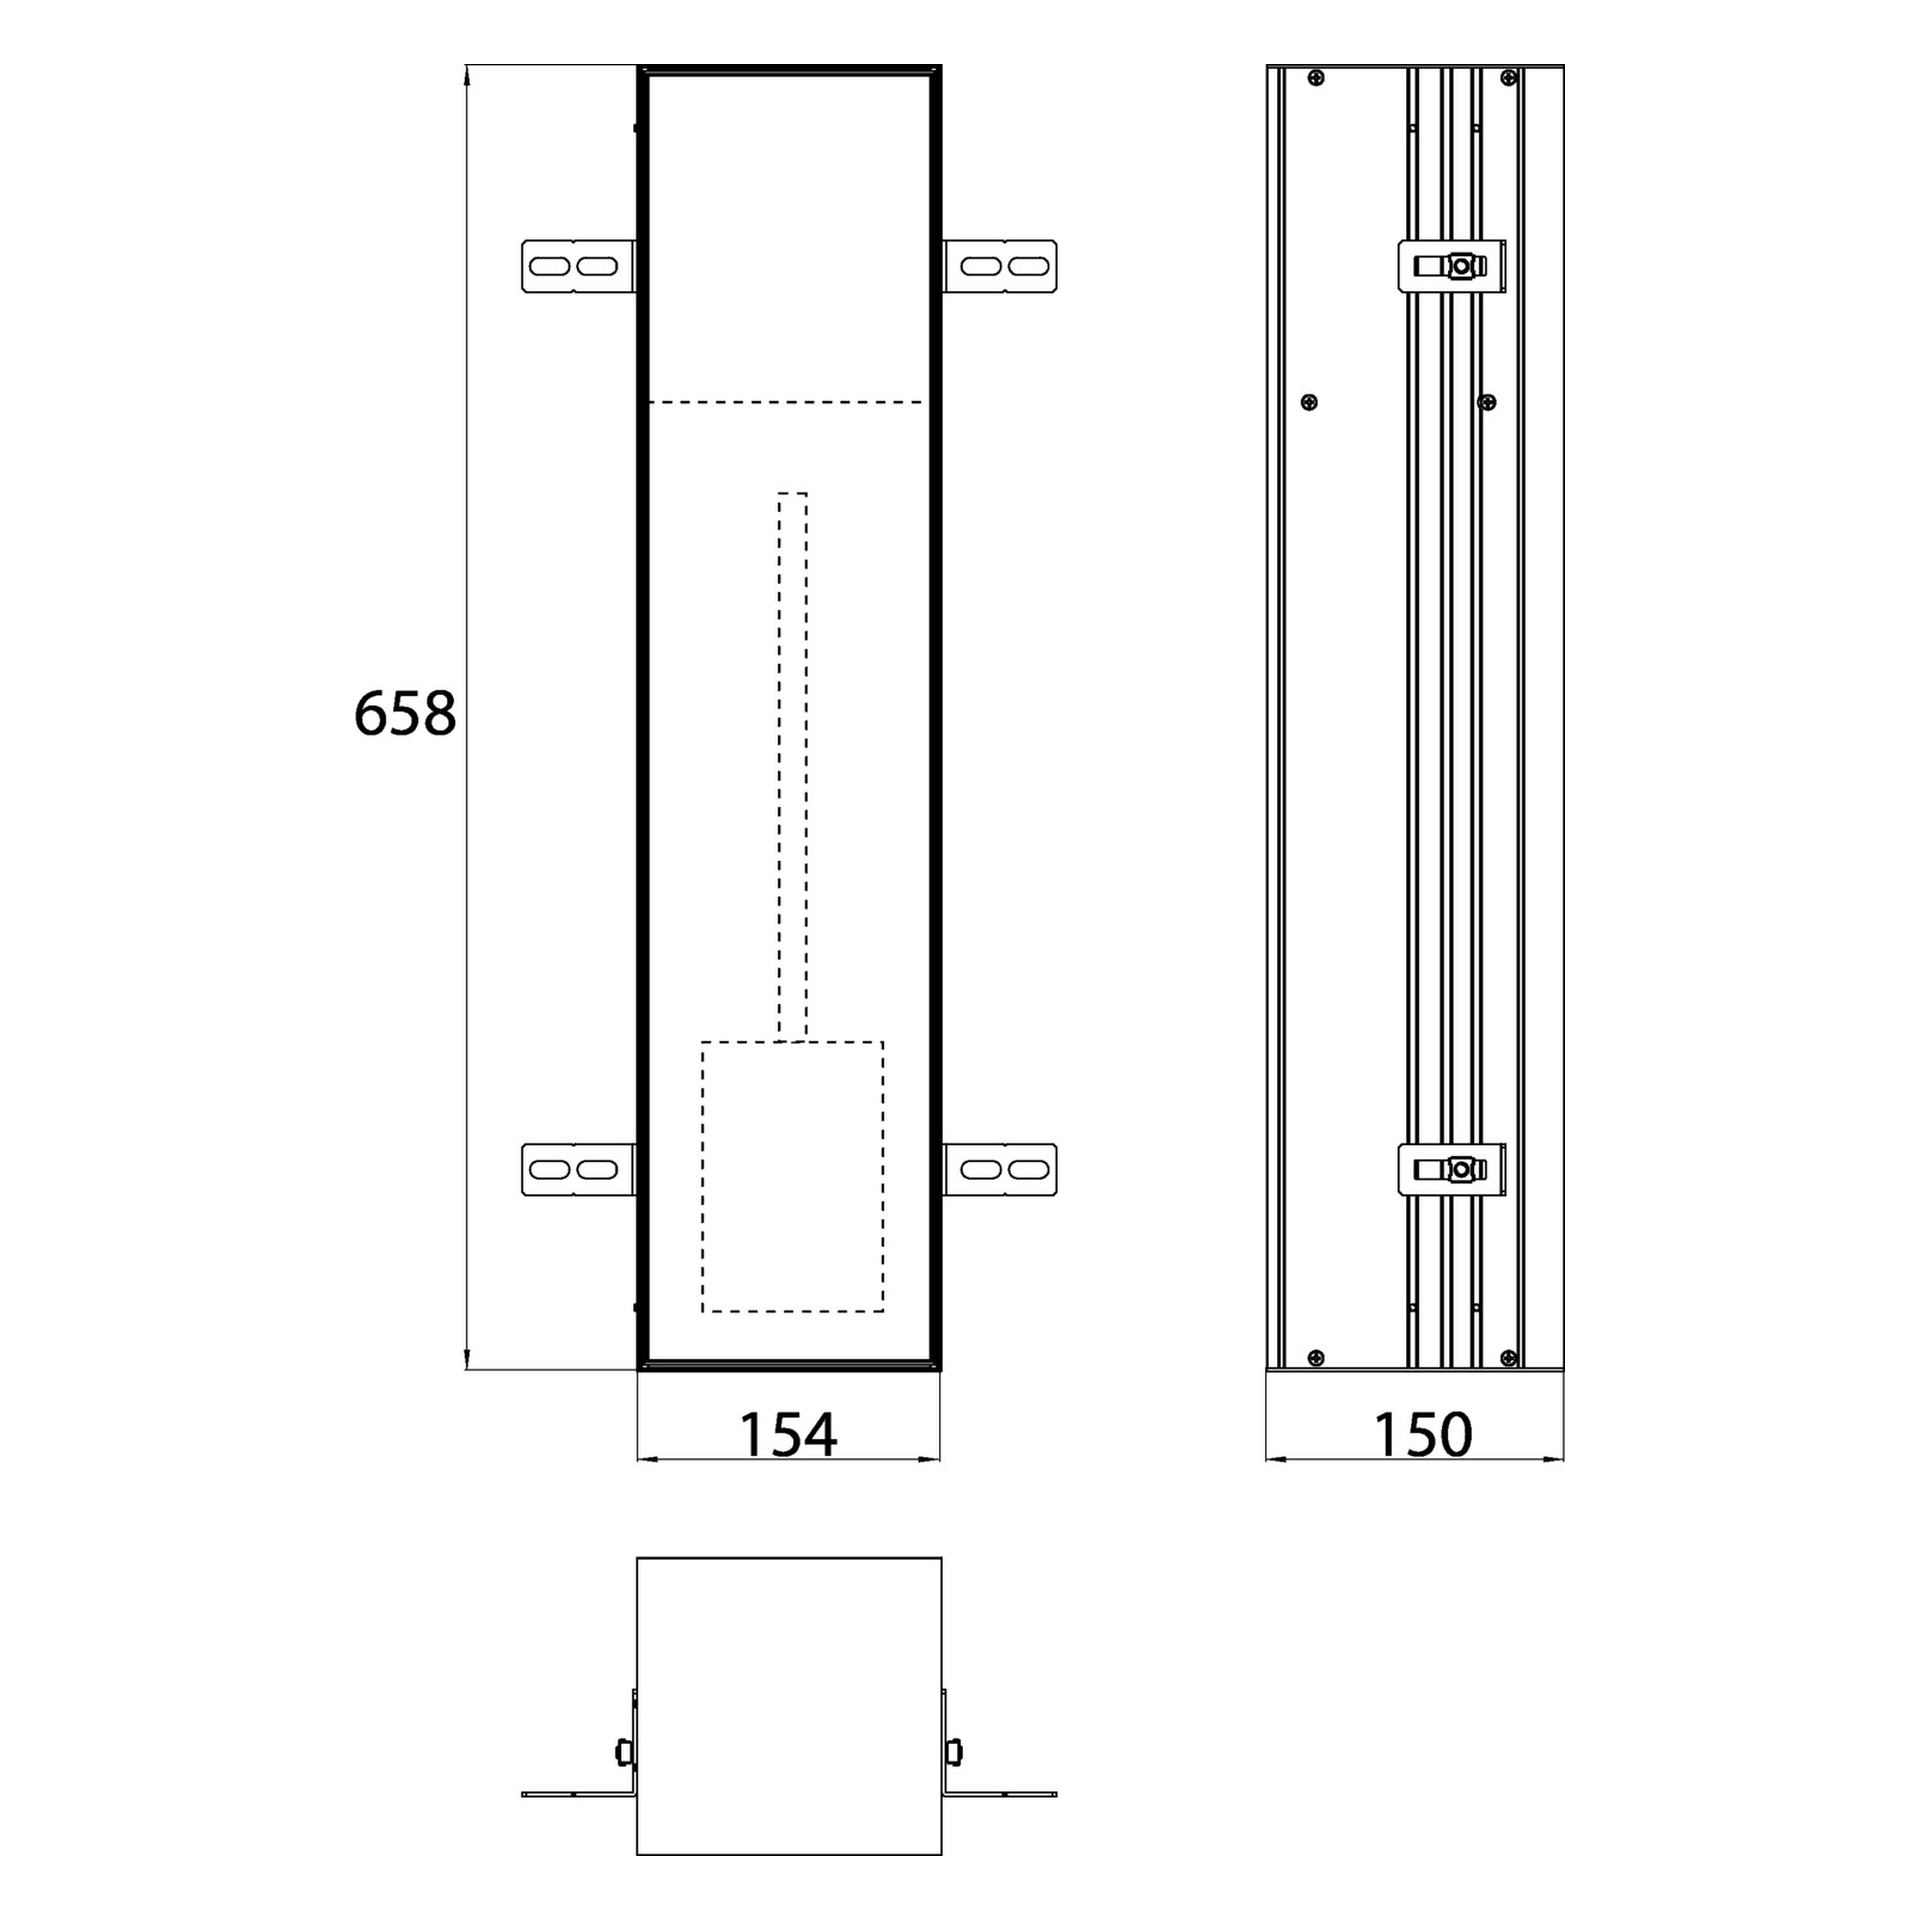 WC-Modul asis plus, Unterputz Papierentnahme oben, 658 mm, Tür rechts